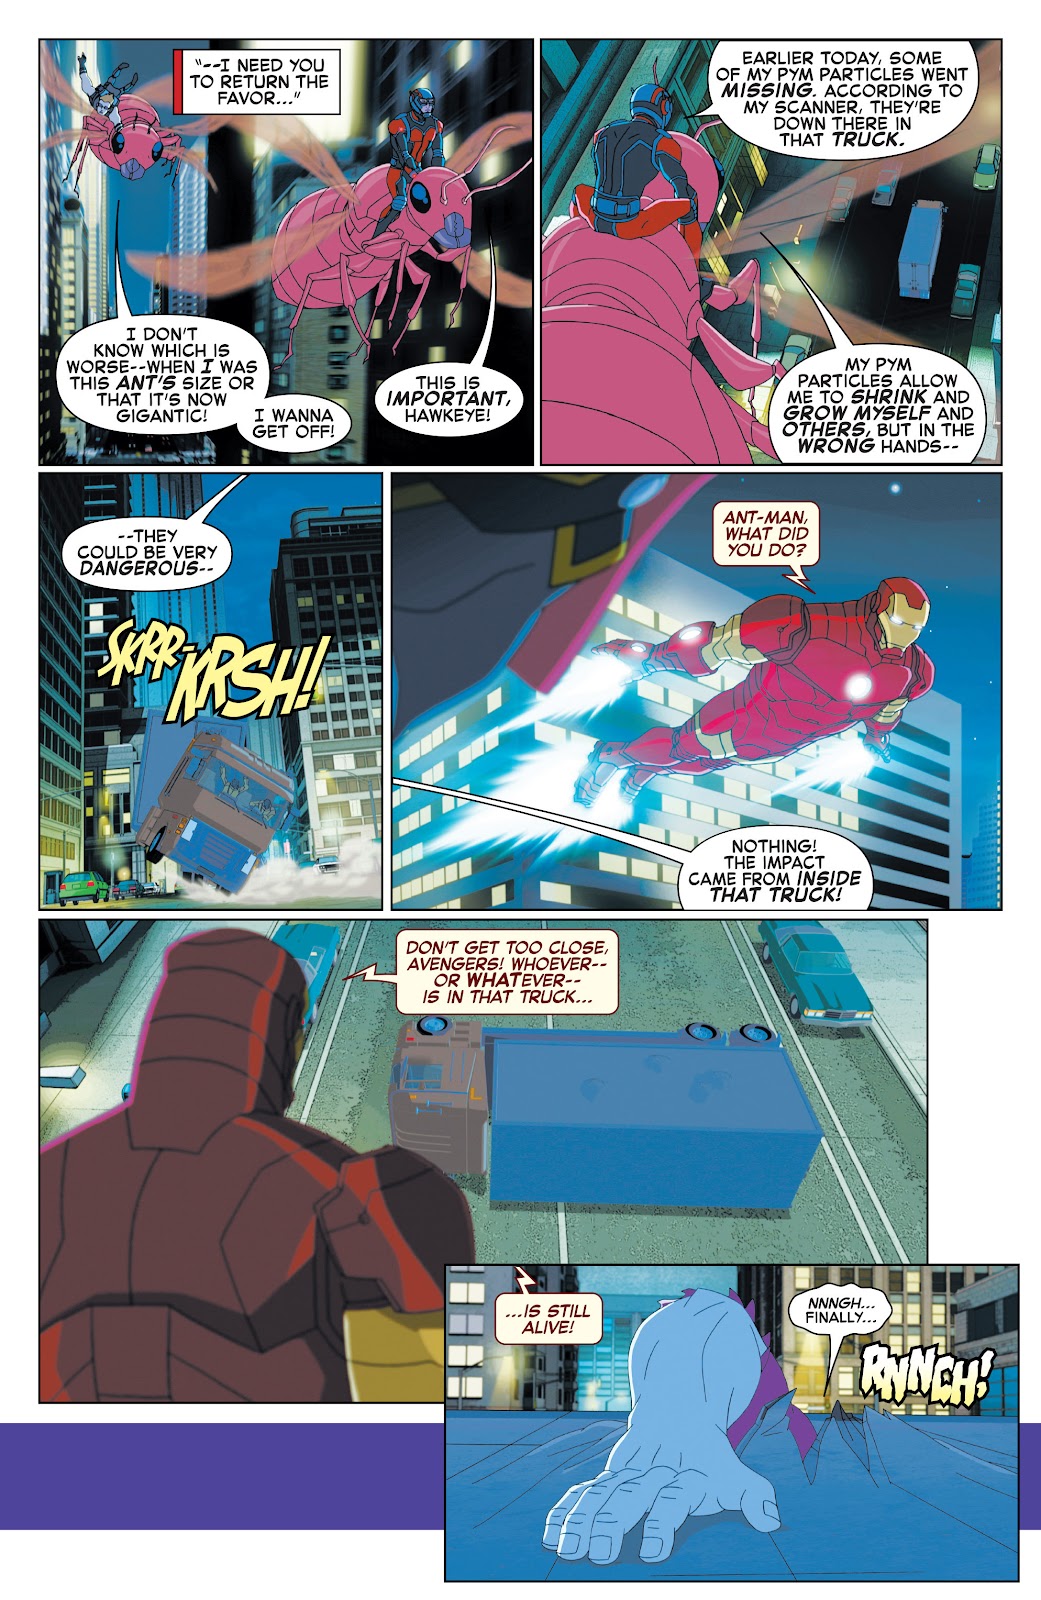 Marvel Universe Avengers Assemble: Civil War issue 3 - Page 6